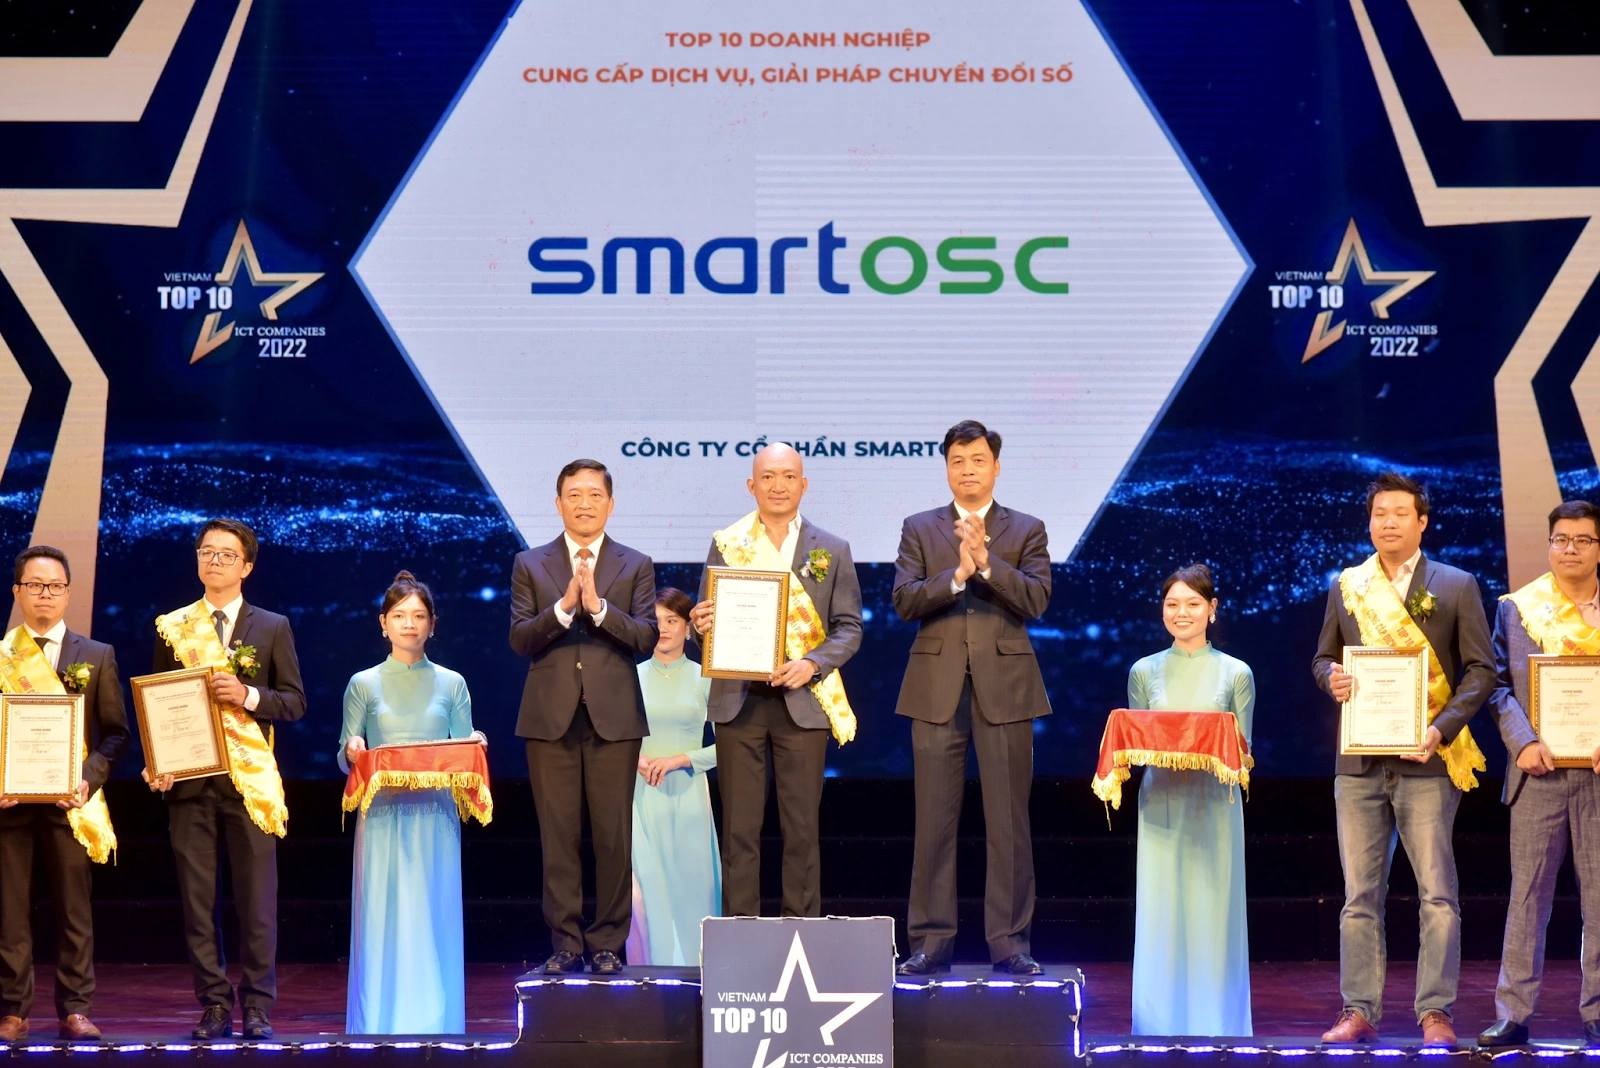 SmartOSC awarded ‘Top 10 Digital Transformation Services & Solutions Company’ in Vietnam